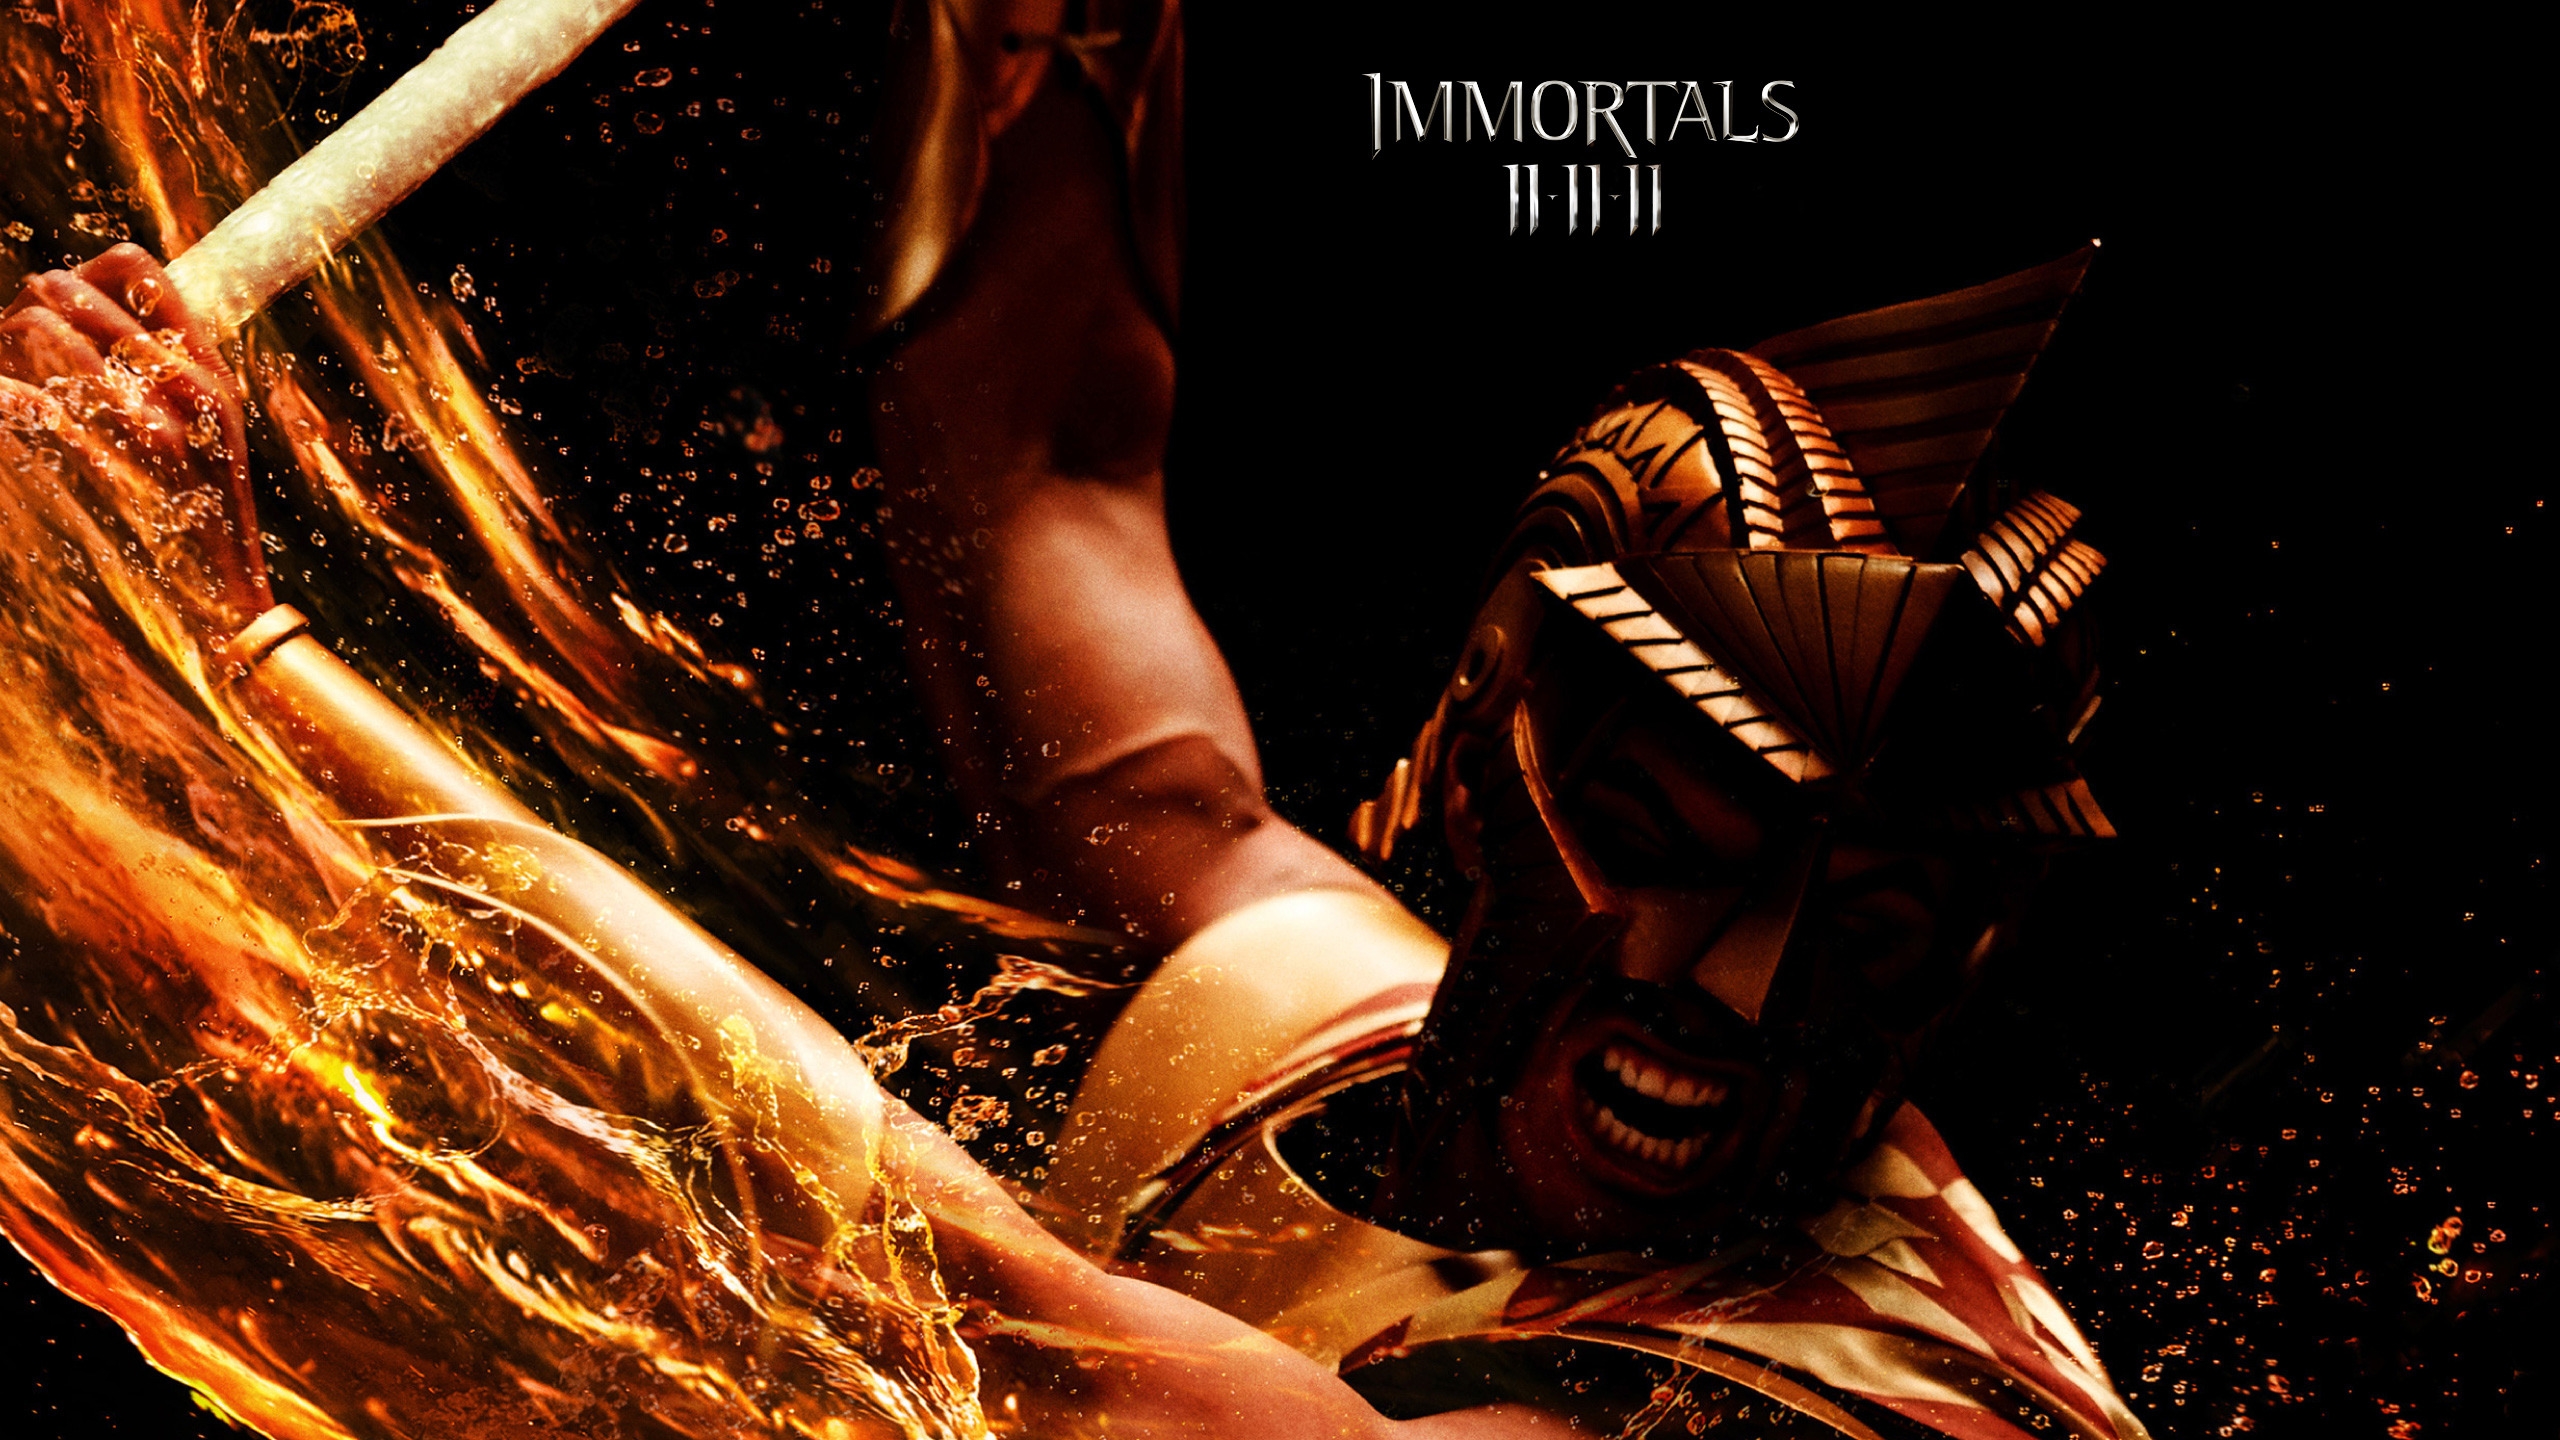 Immortals 2011 Movie for 2560x1440 HDTV resolution